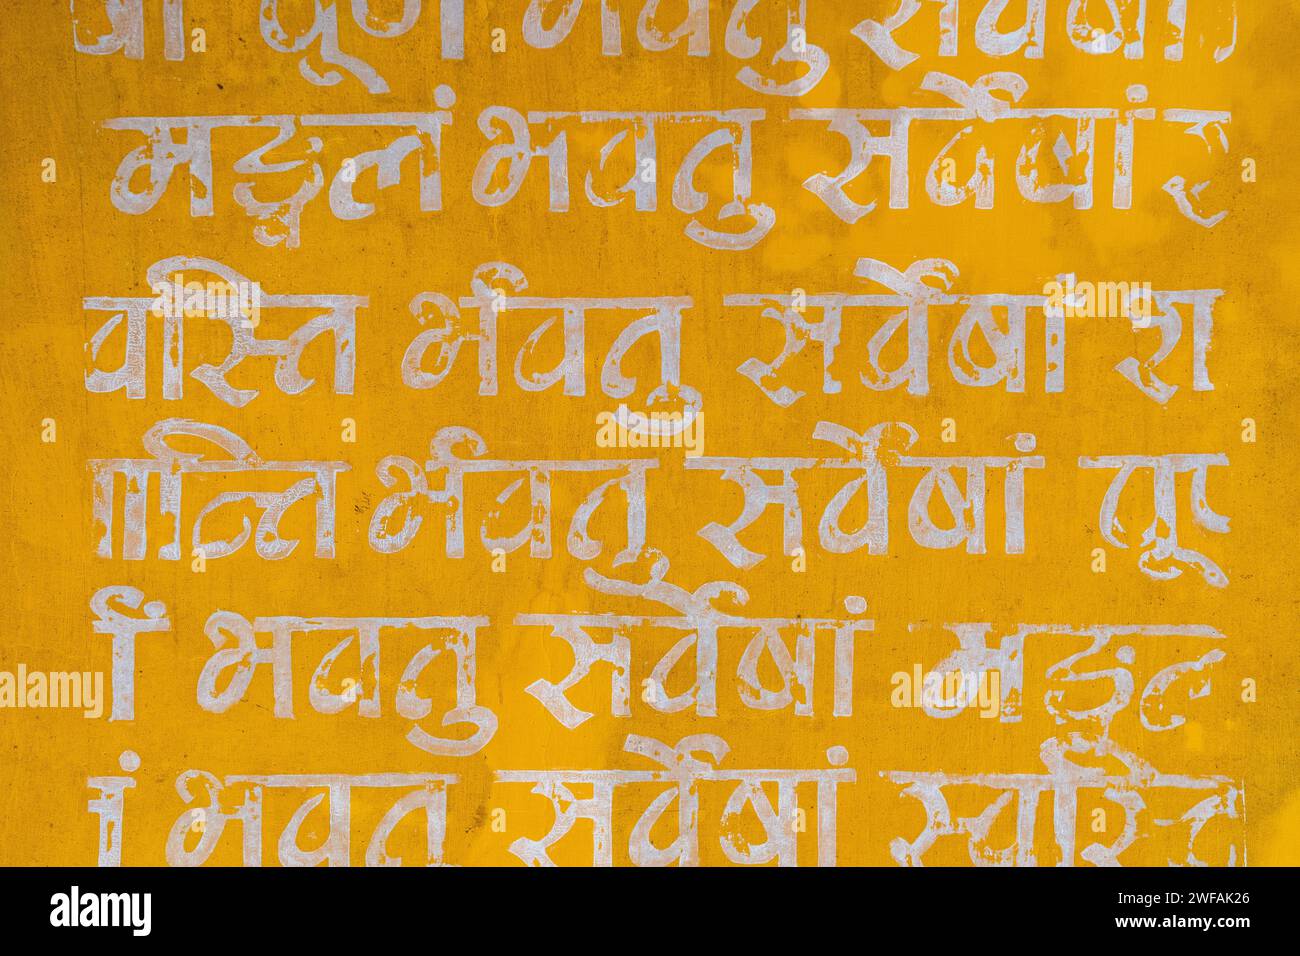 Mantra sanscrita, scrittura bianca su sfondo giallo, Tamil Nadu, India Foto Stock